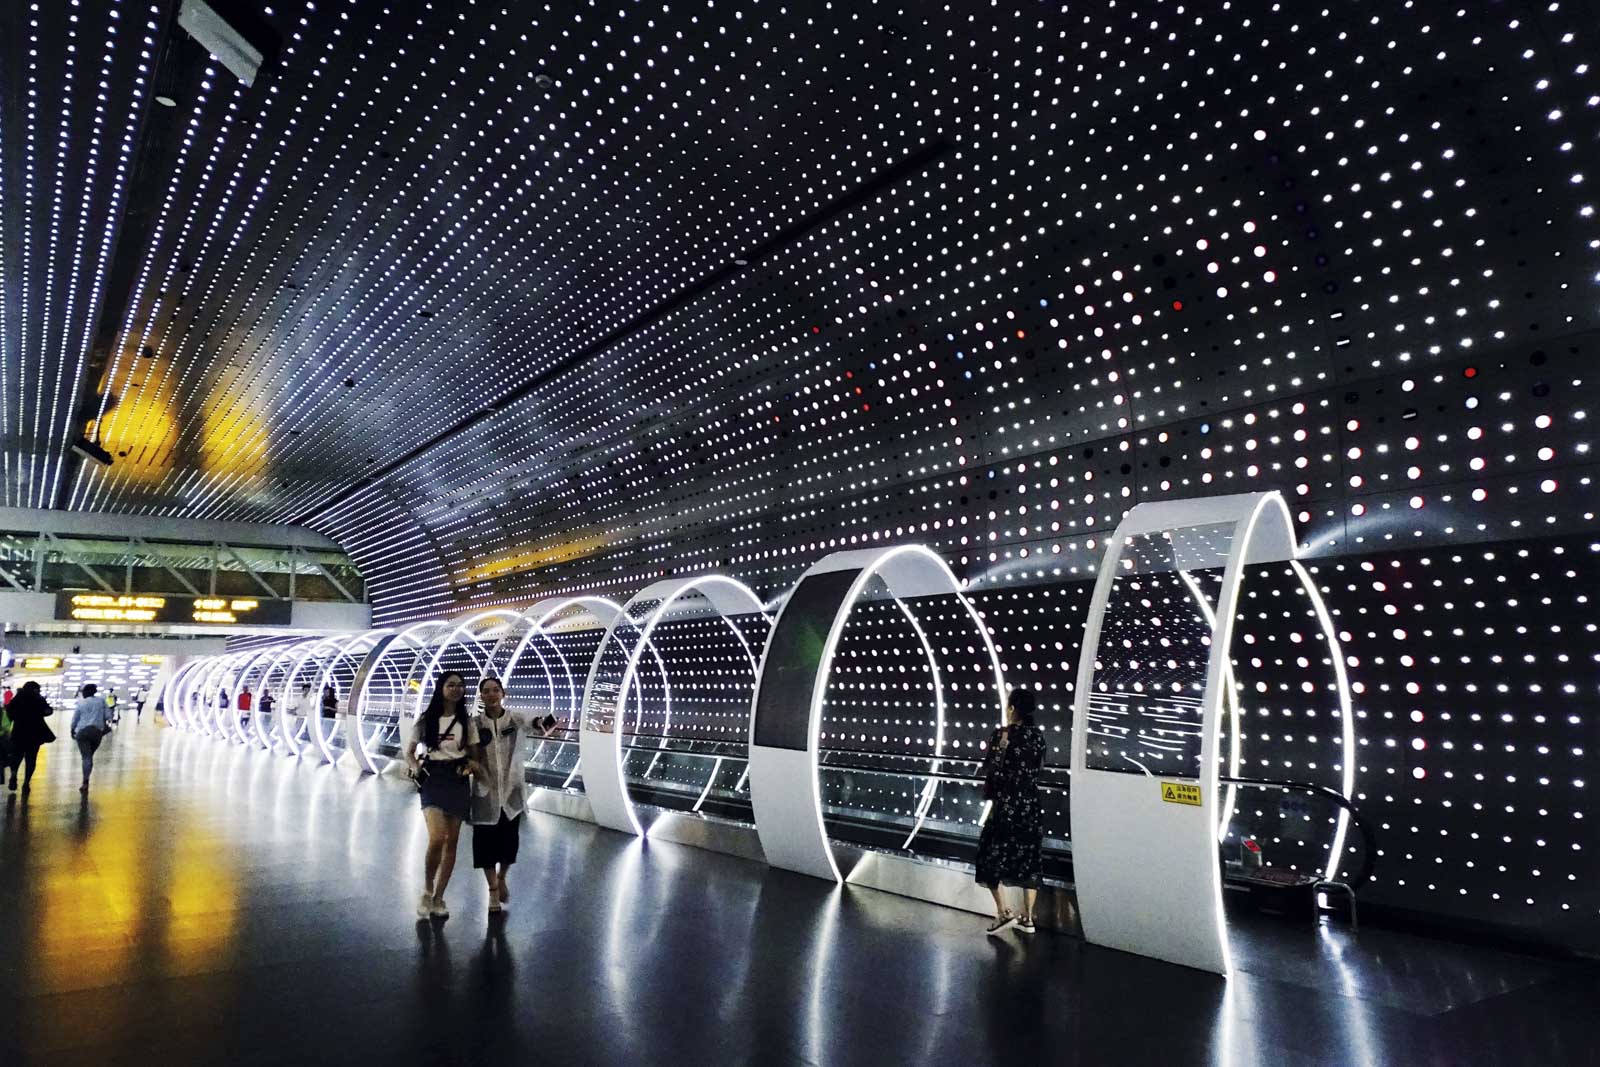 Pearl River Delta, Space Tunnel opens in south China's Guangzhou Baiyun International Airport, Guangzhou, China